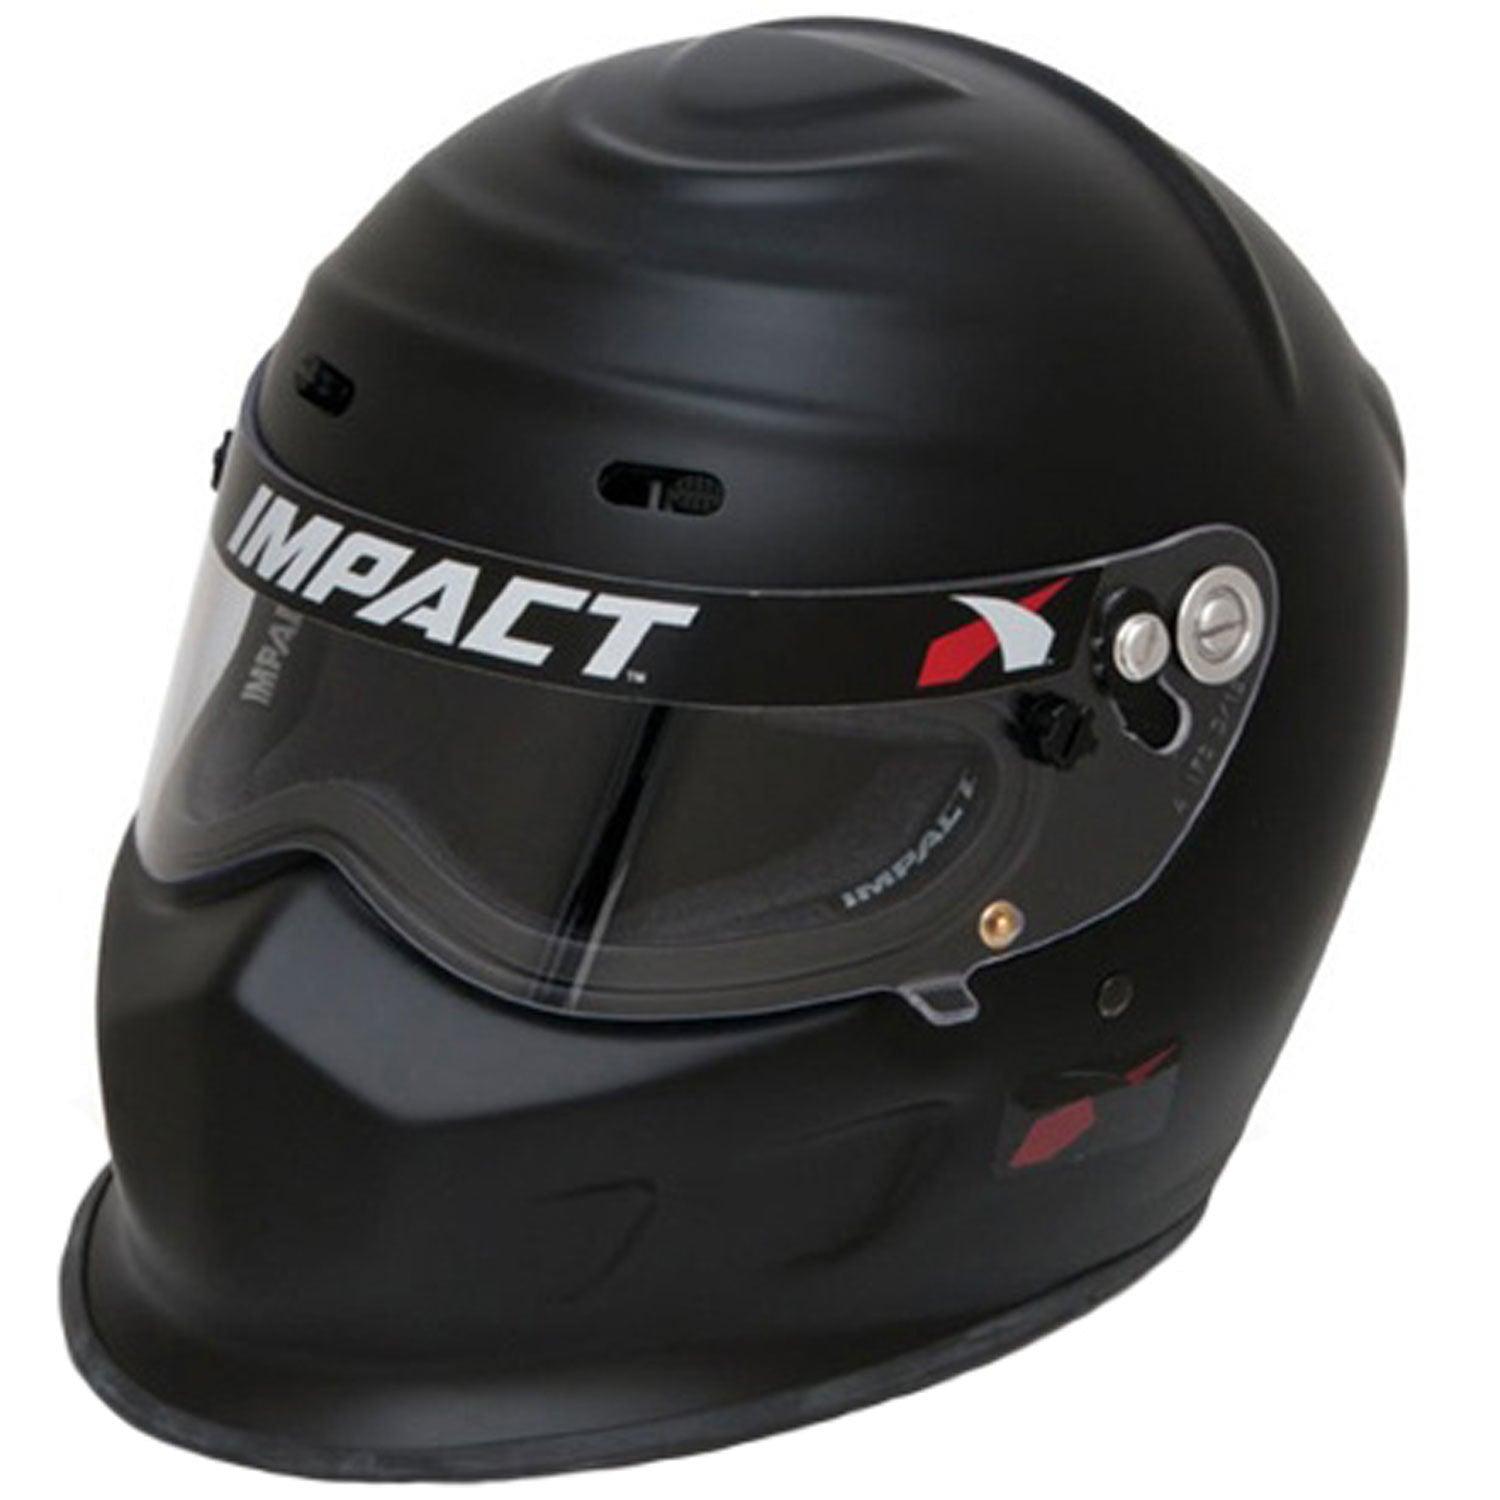 Helmet Champ Small Flat Black SA2020 - Burlile Performance Products